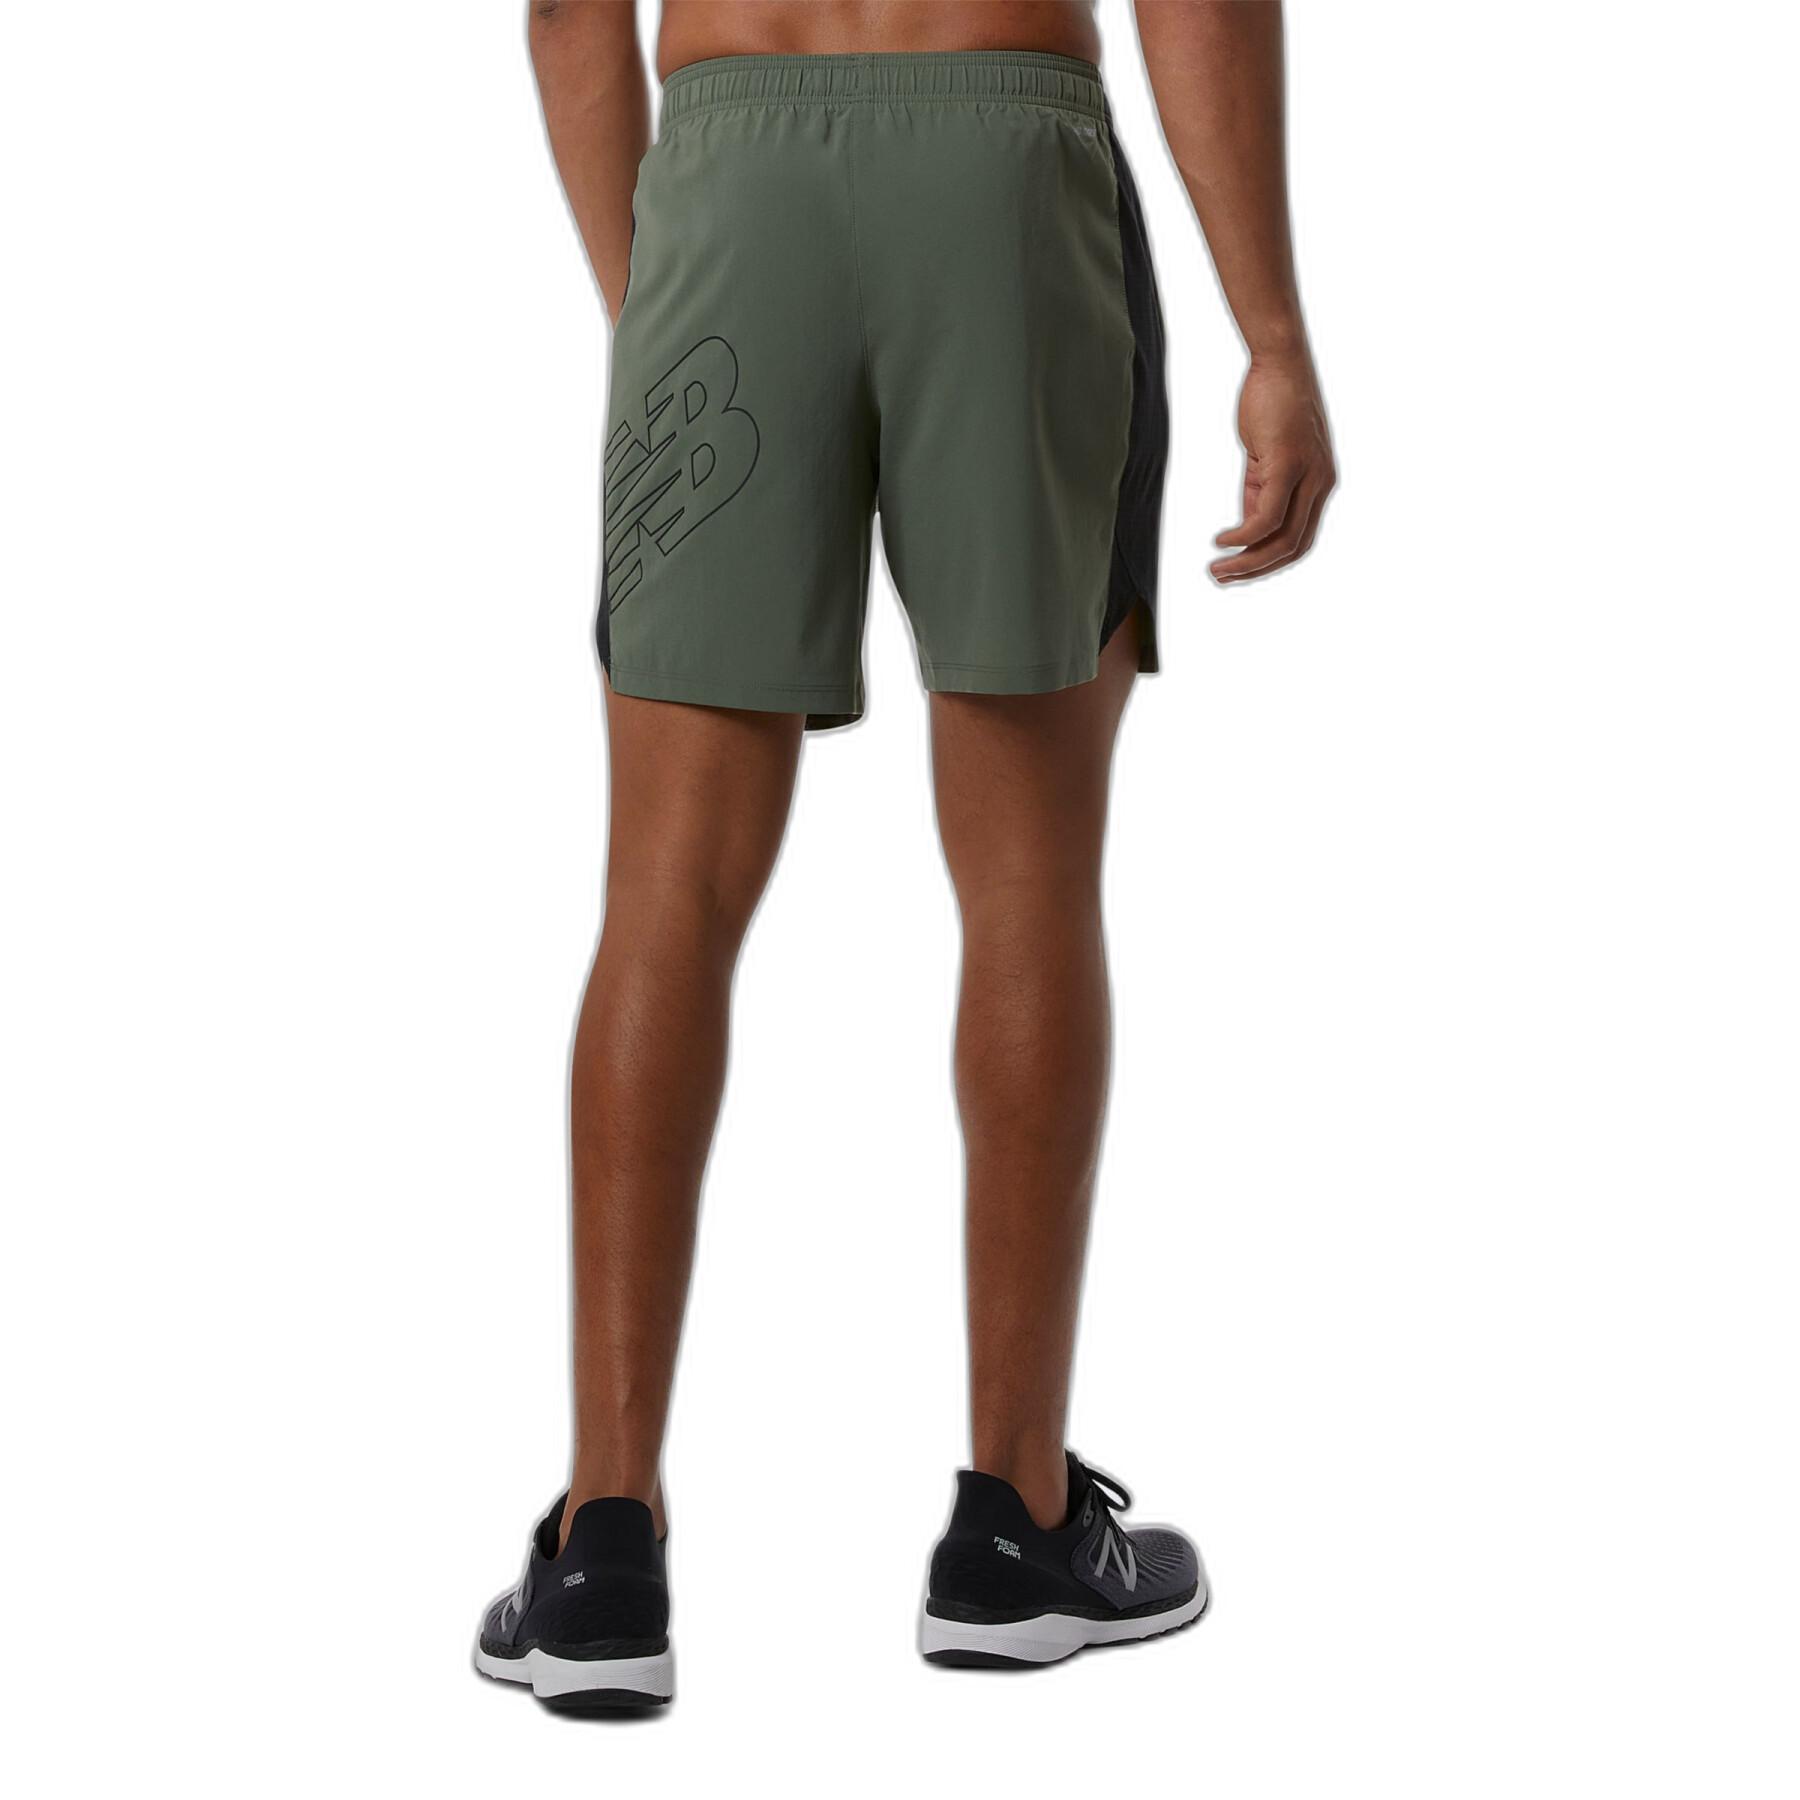 Gewebte Shorts mit Logo New Balance Tenacity 7 "